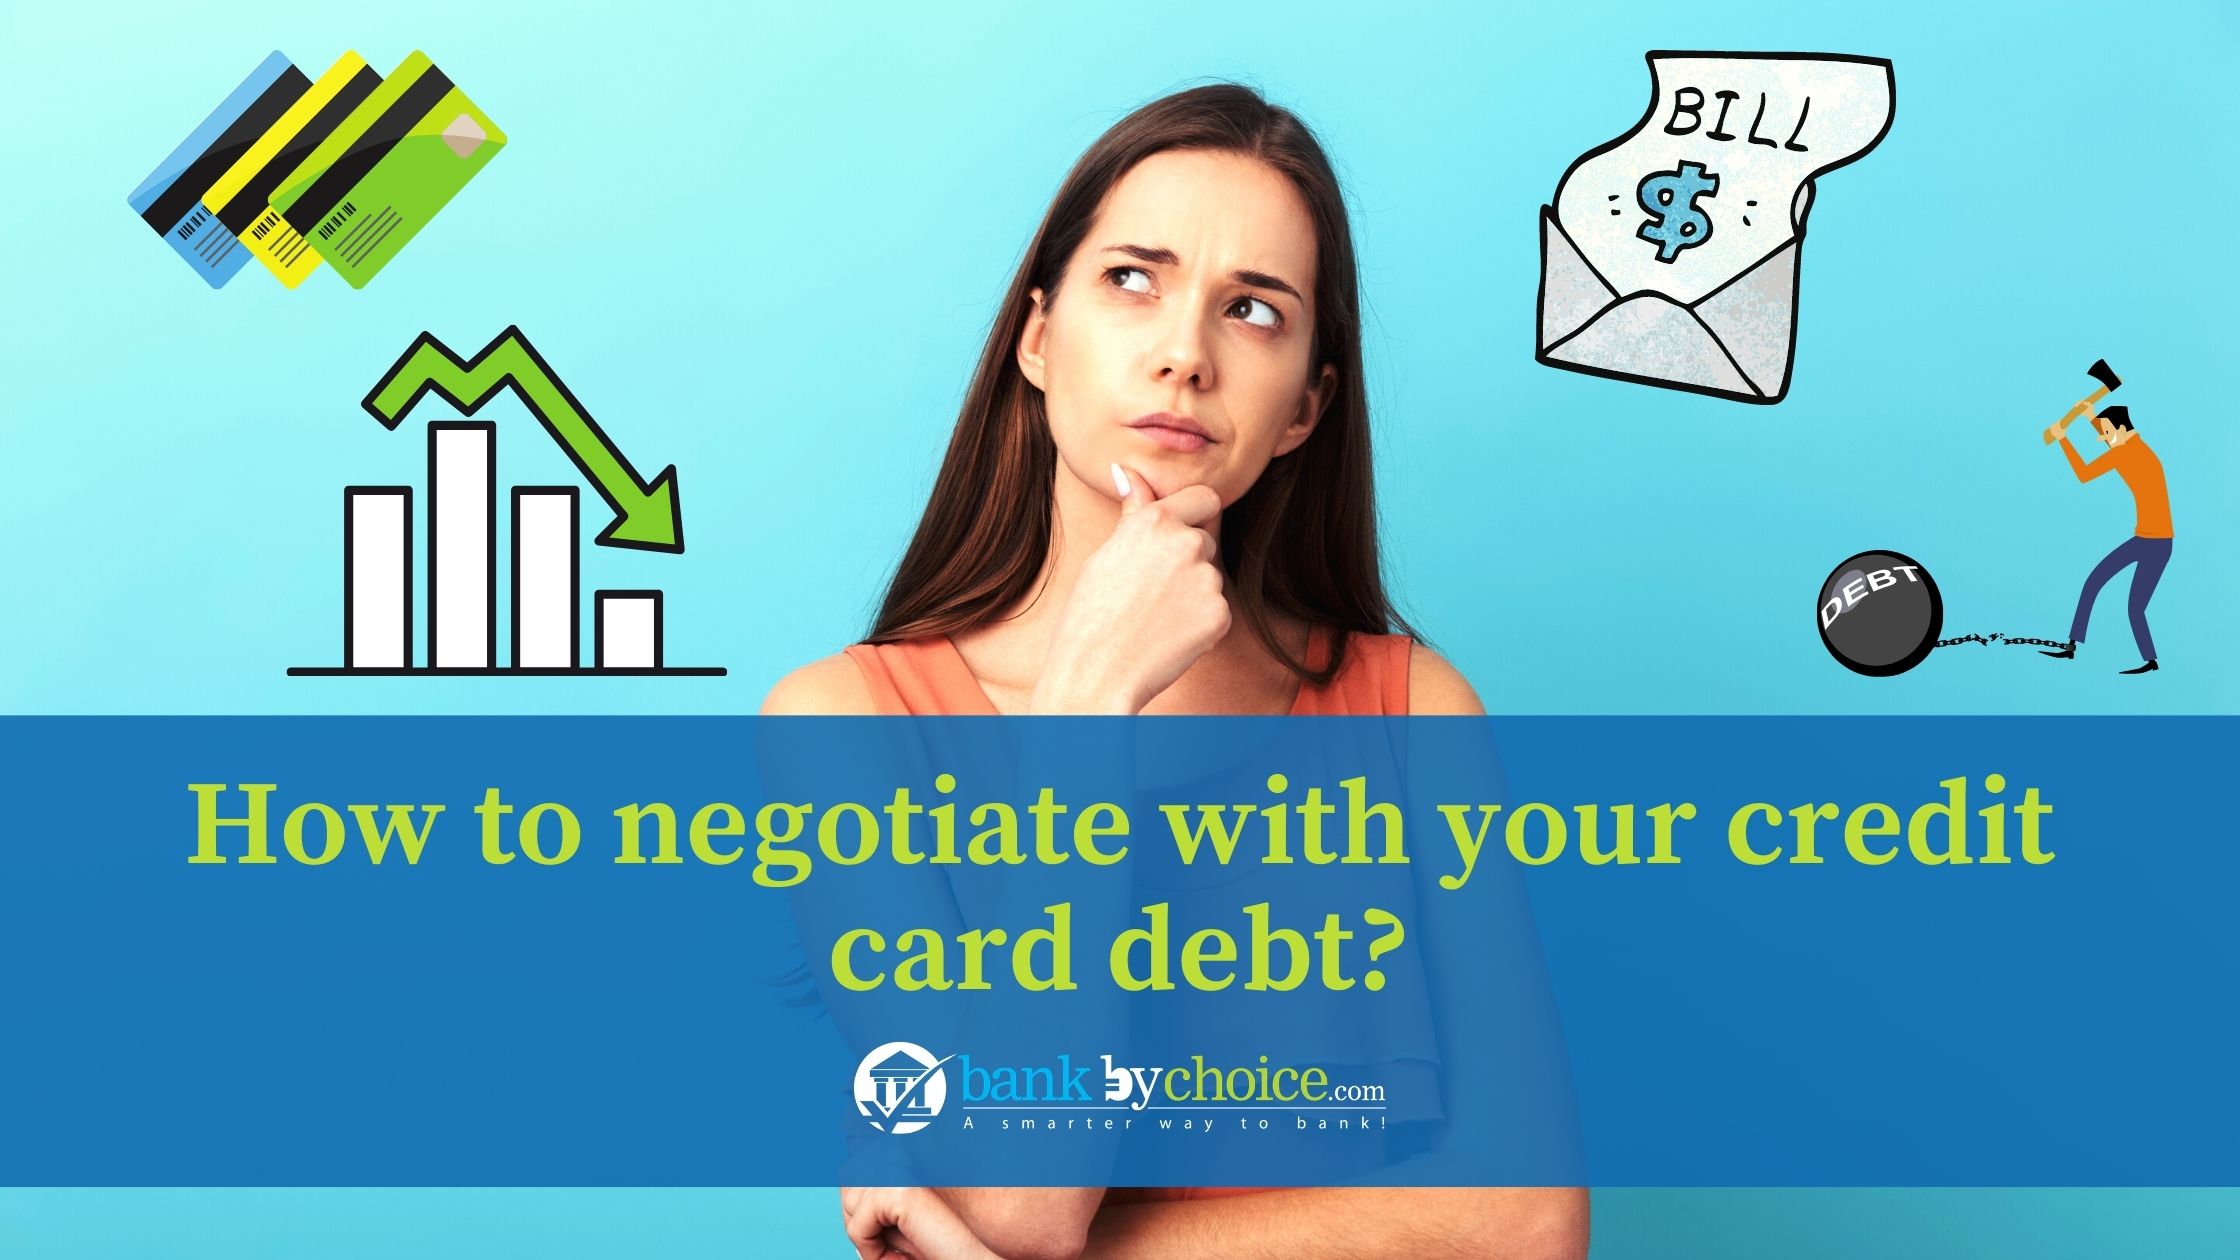 credi card debt negotiate